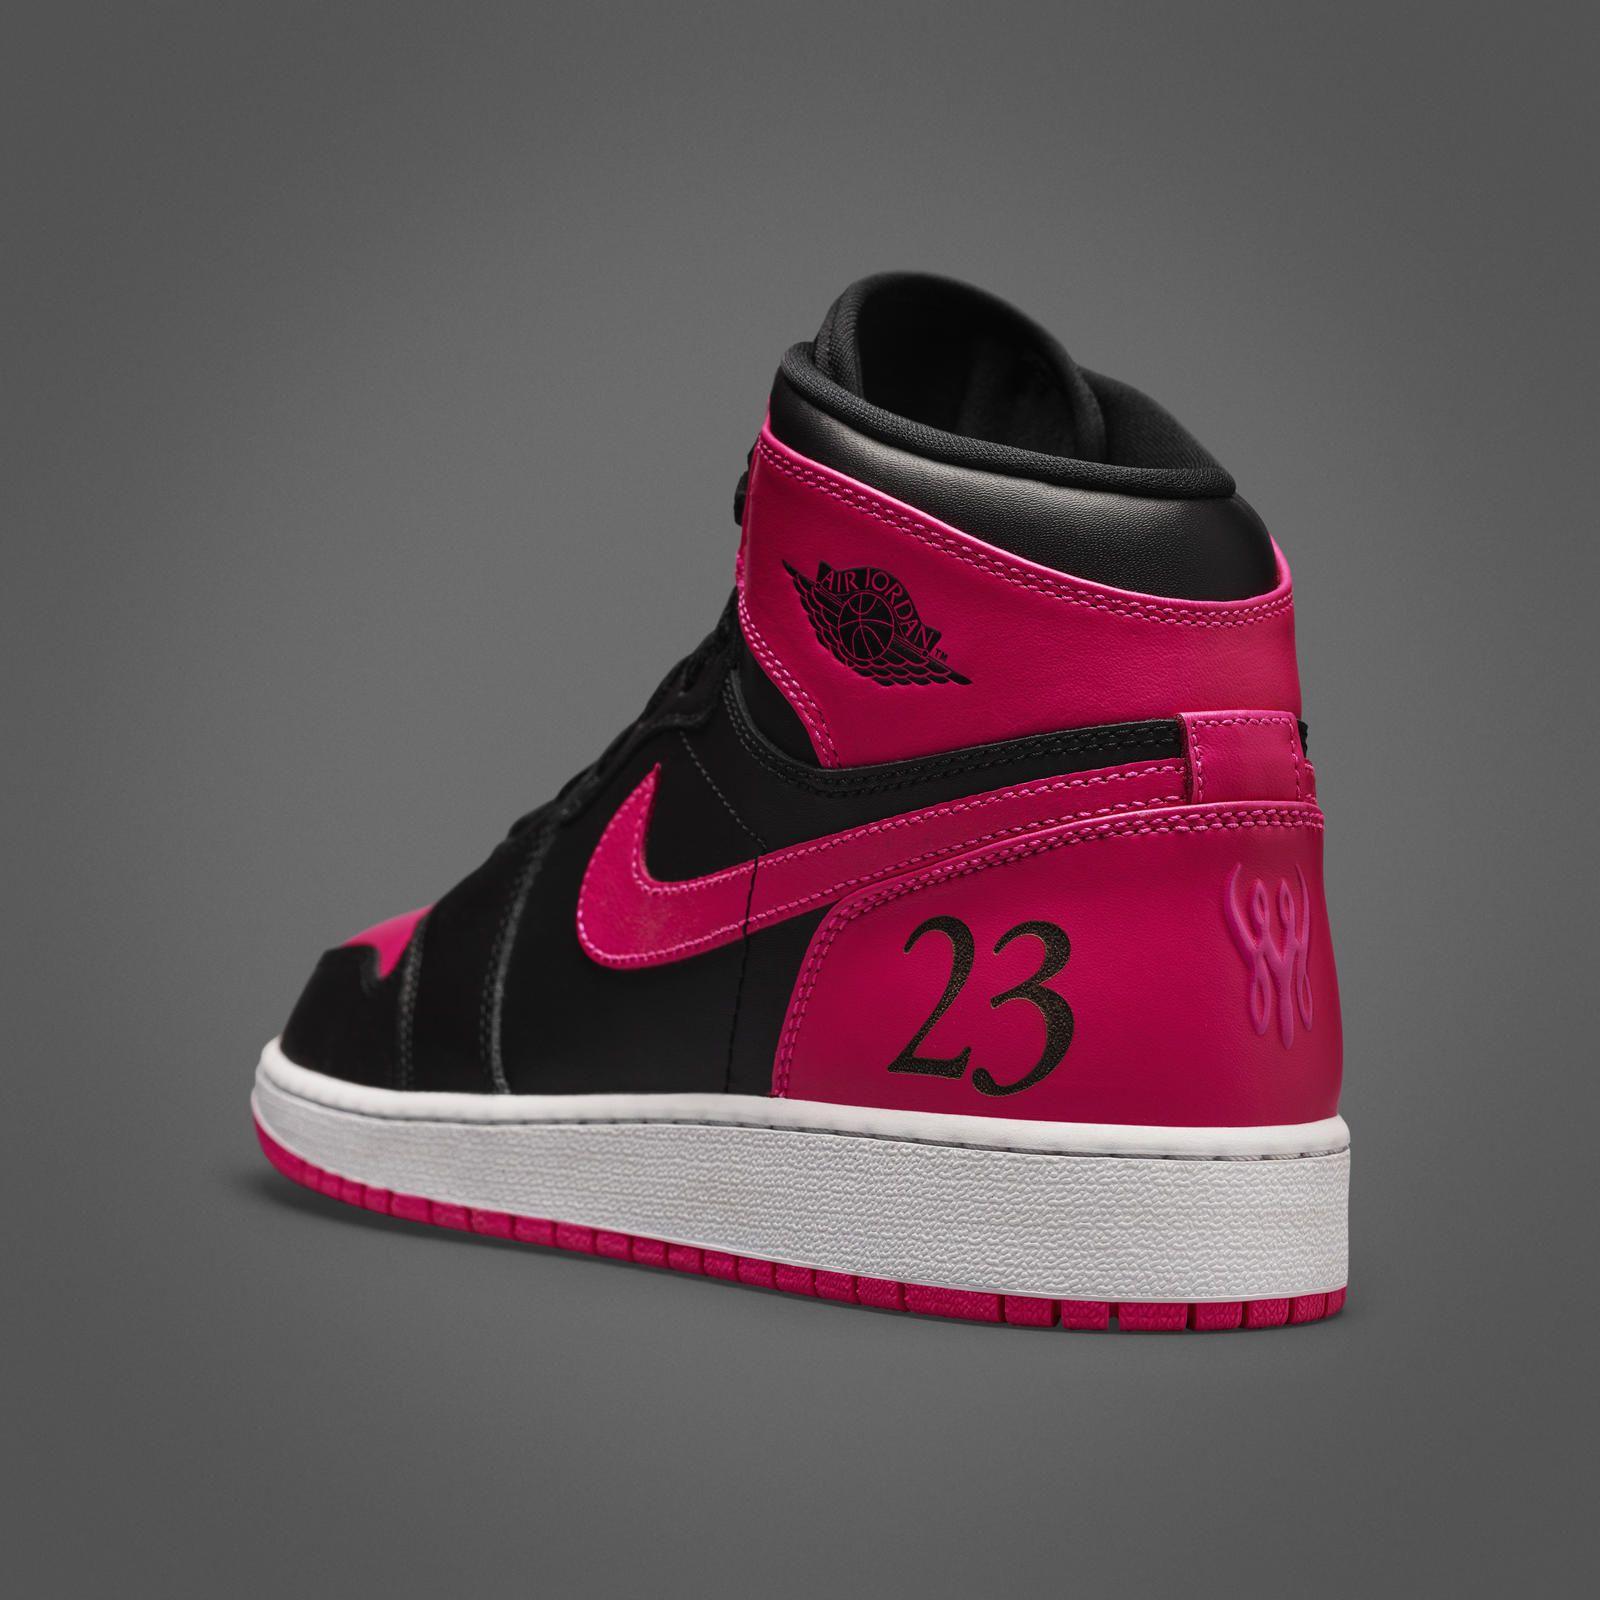 Jordan with Jordan 23 Logo - Nike and Jordan Brand Celebrate Serena's #23 VICTORY - Nike News